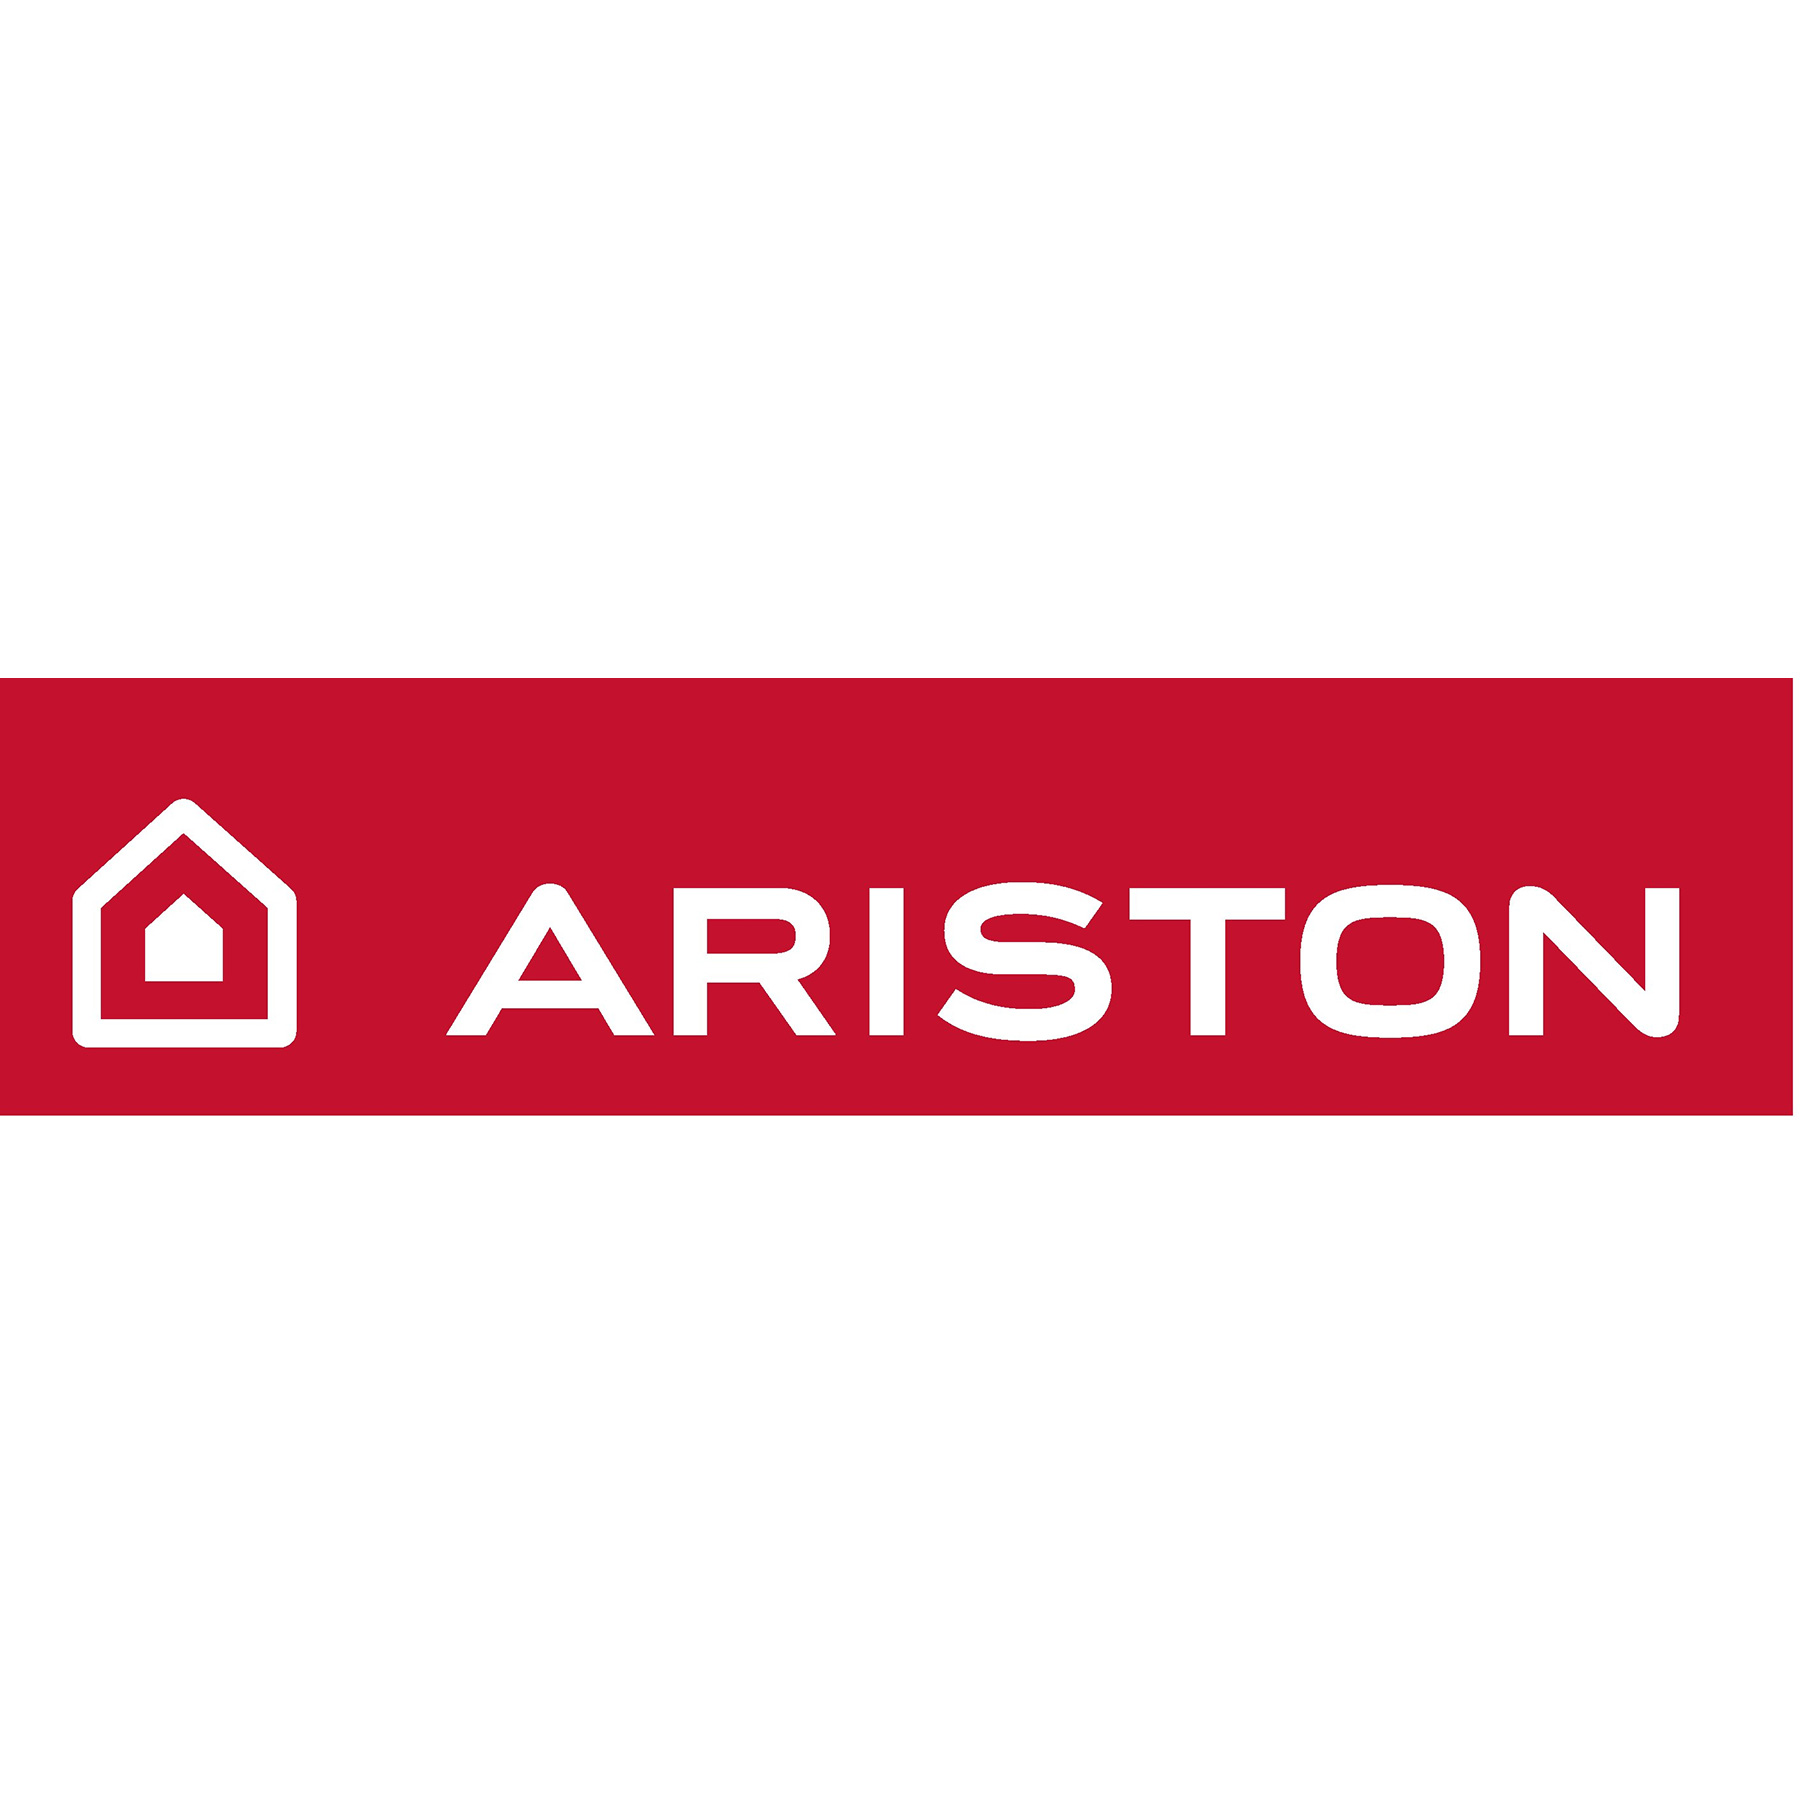 Ariston страна. Ariston котел лого. Аристон логотип. Арис лого. Хотпоинт Аристон лого.